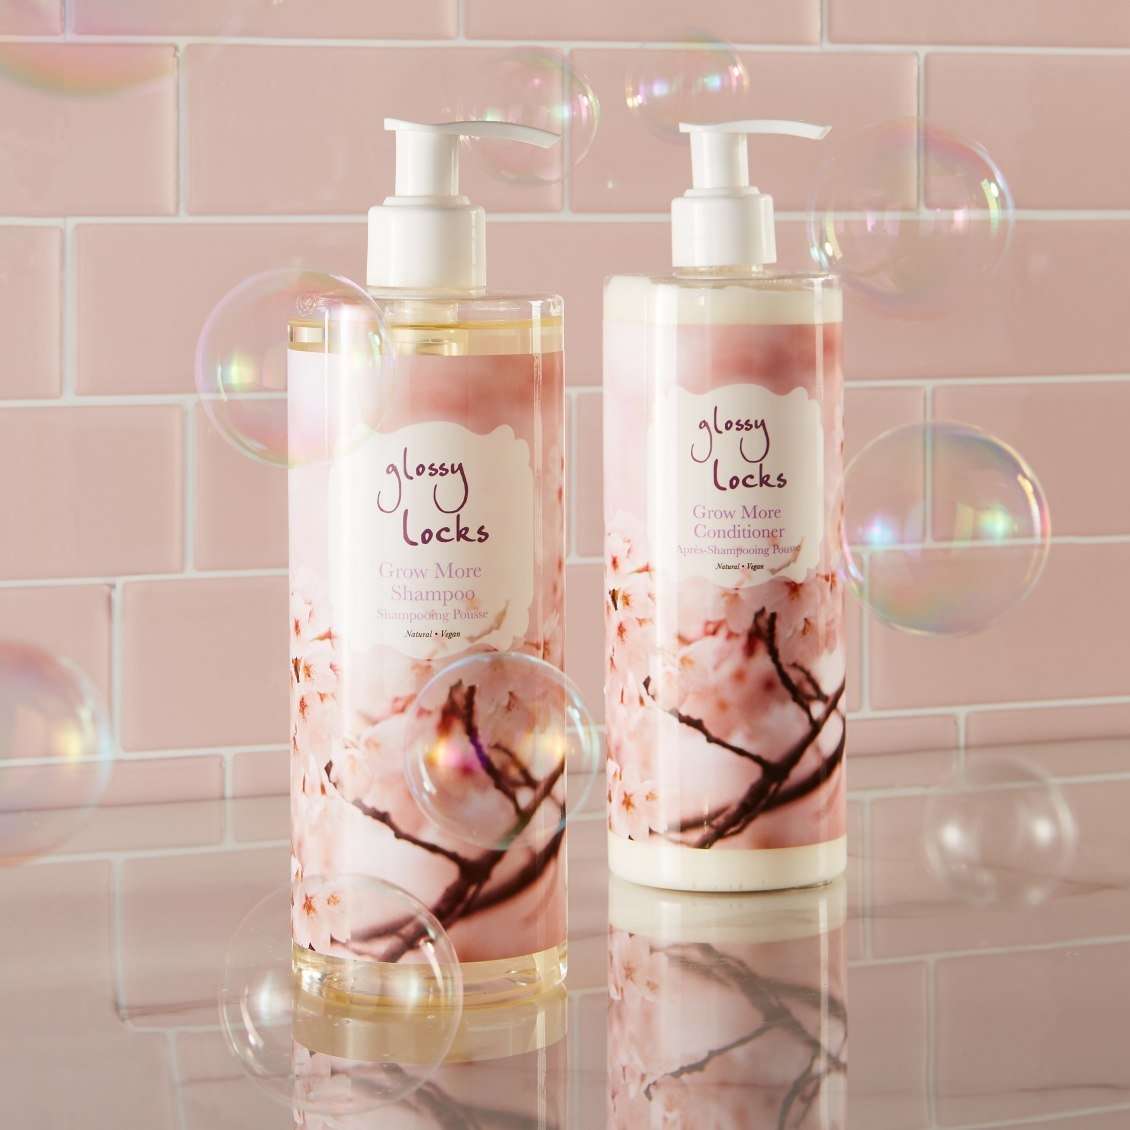 100% Pure® Grow More Shampoo at Socialite Beauty Canada